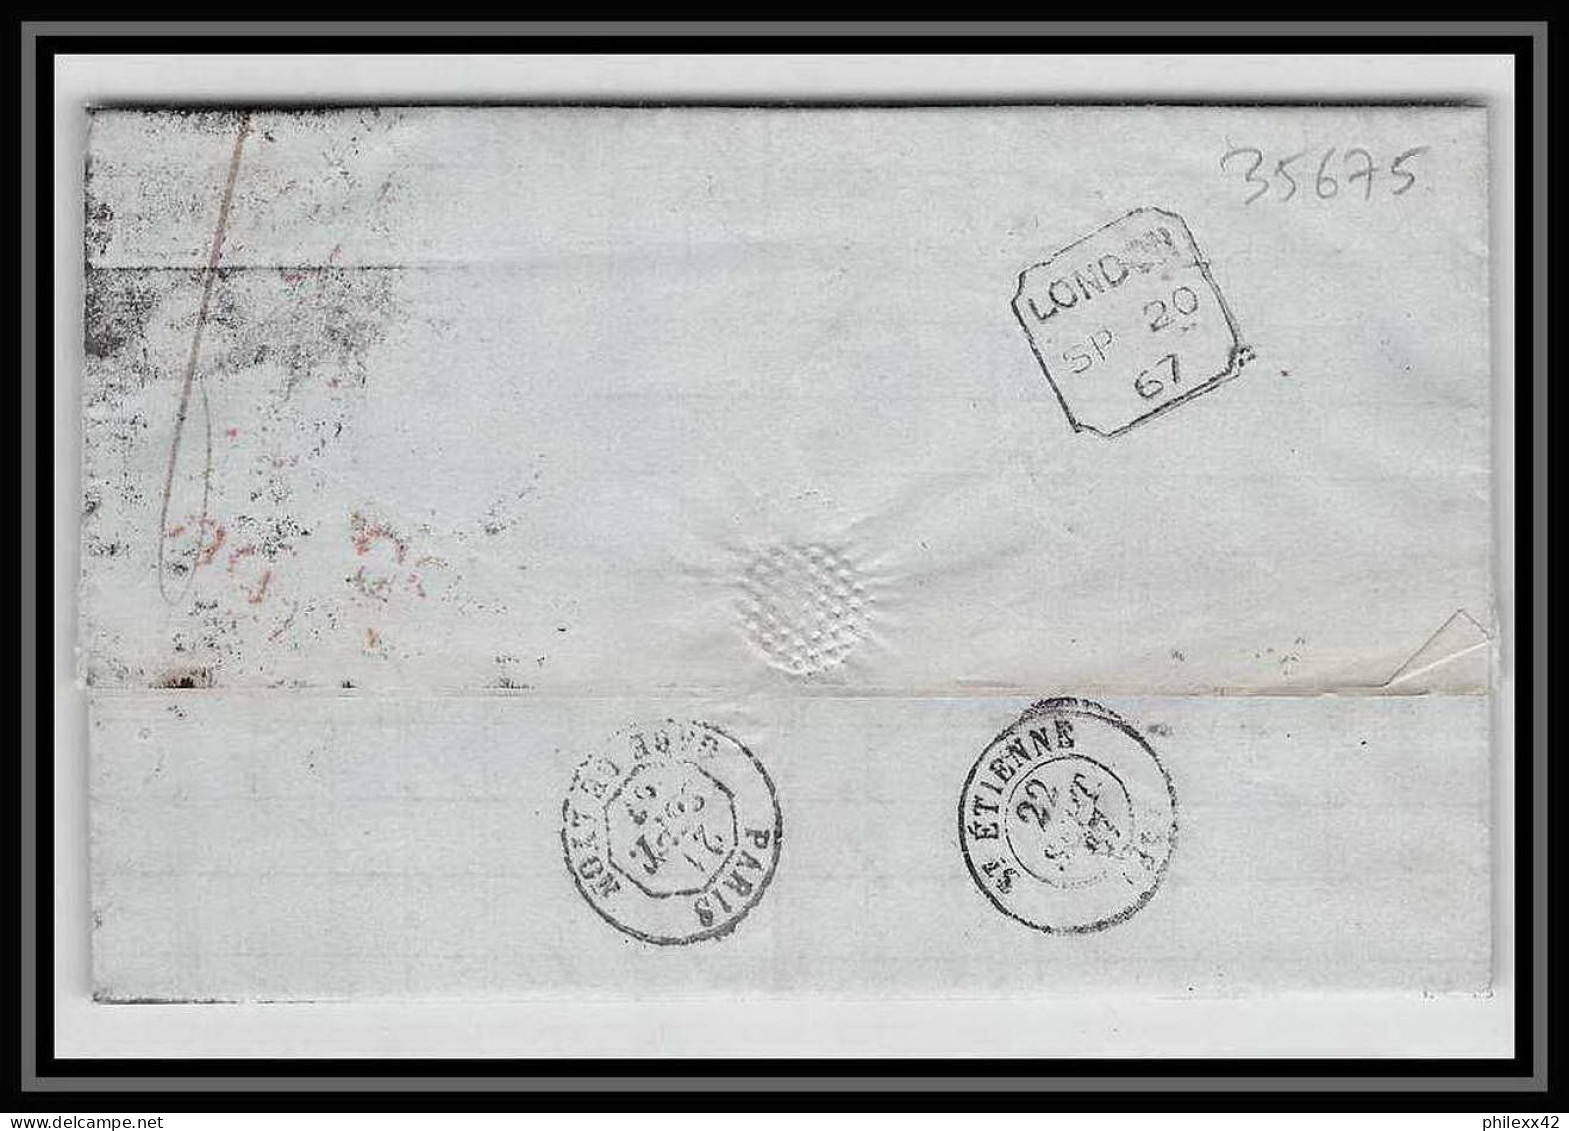 35675 N°32 Victoria 4p Red London St Etienne France 1867 Cachet 48 Lettre Cover Grande Bretagne England - Storia Postale